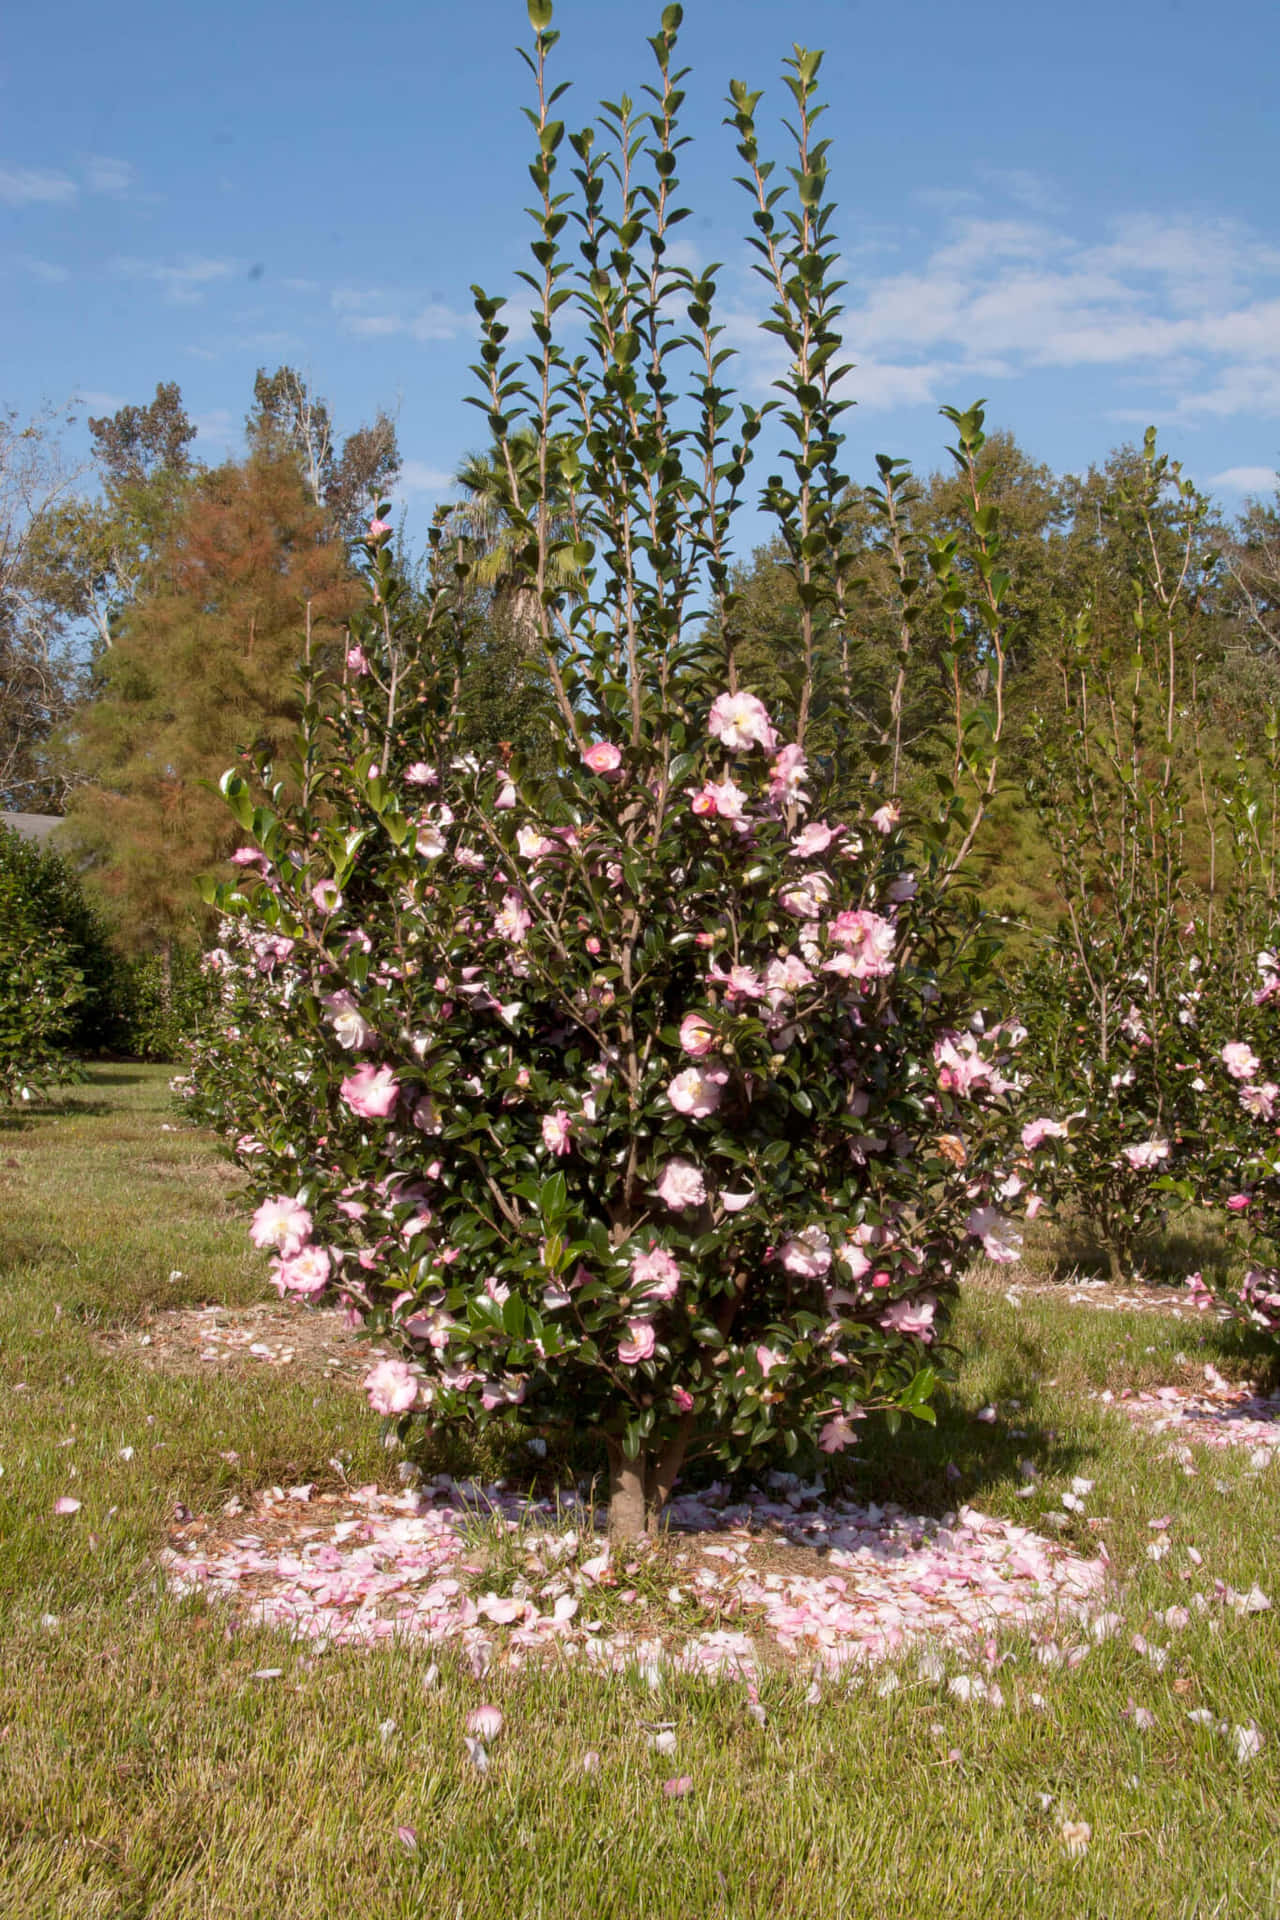 The beautiful pink blossoms of Camellia Sasanqua